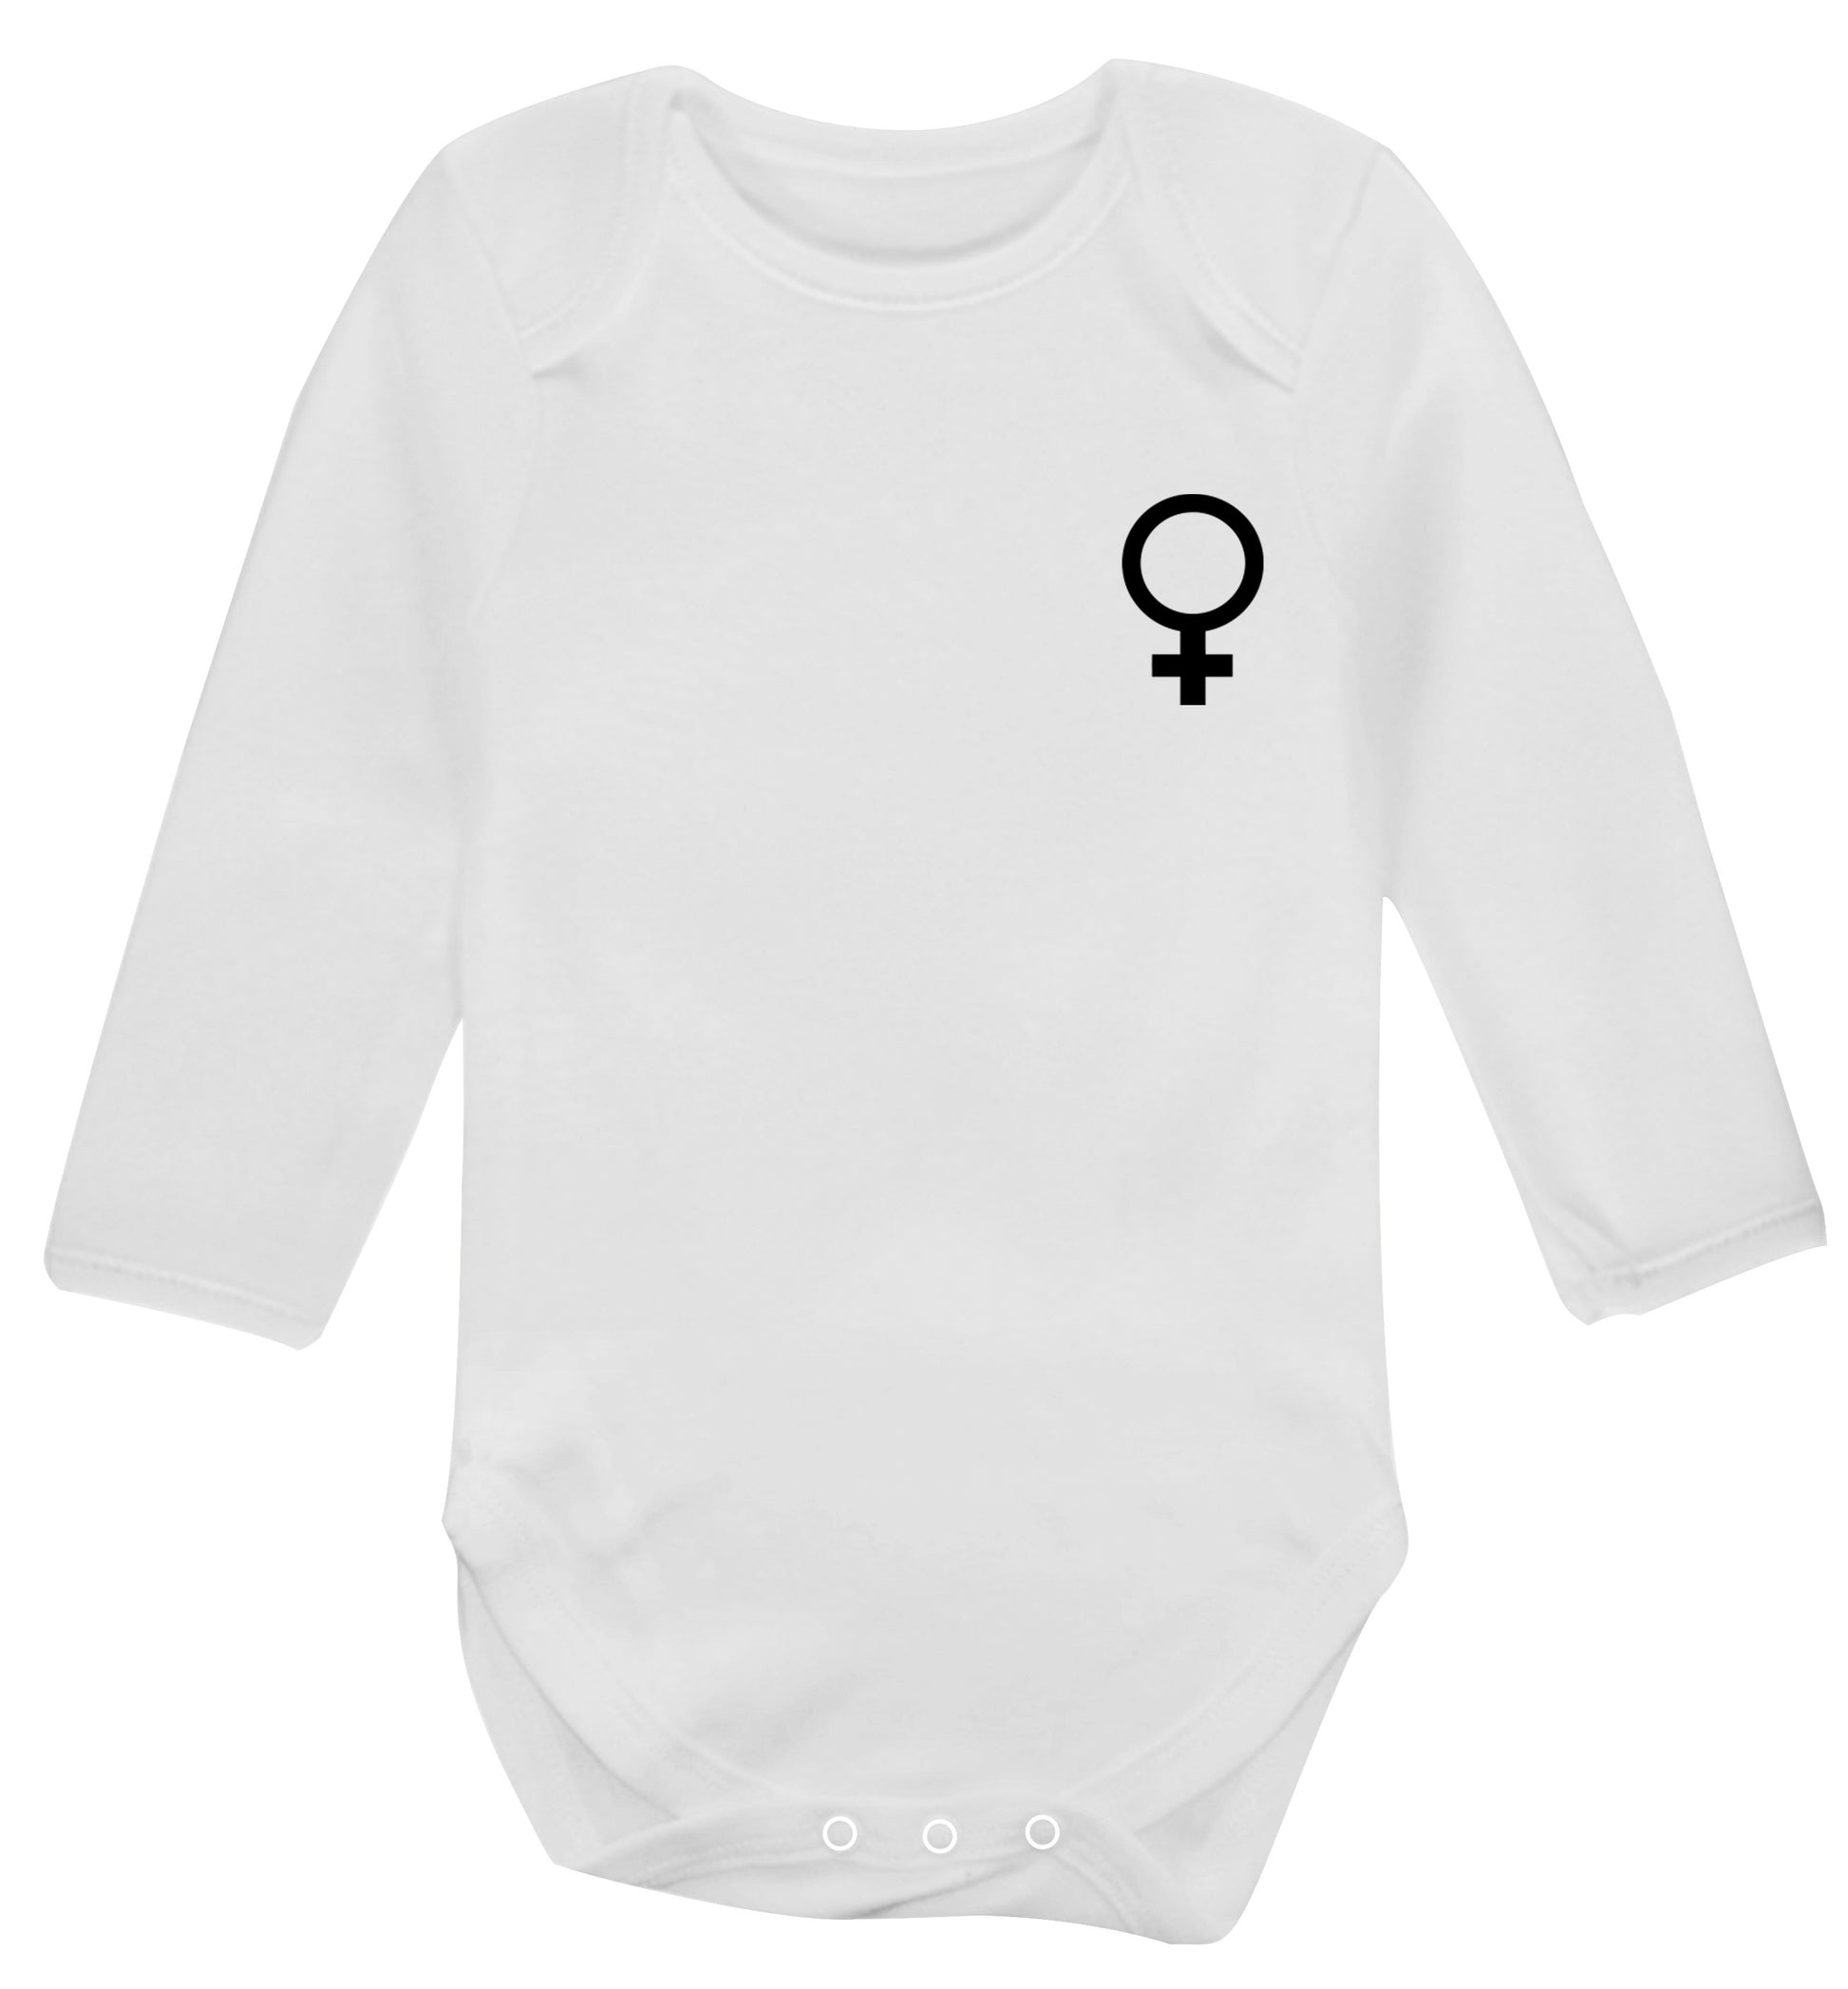 Female pocket symbol Baby Vest long sleeved white 6-12 months